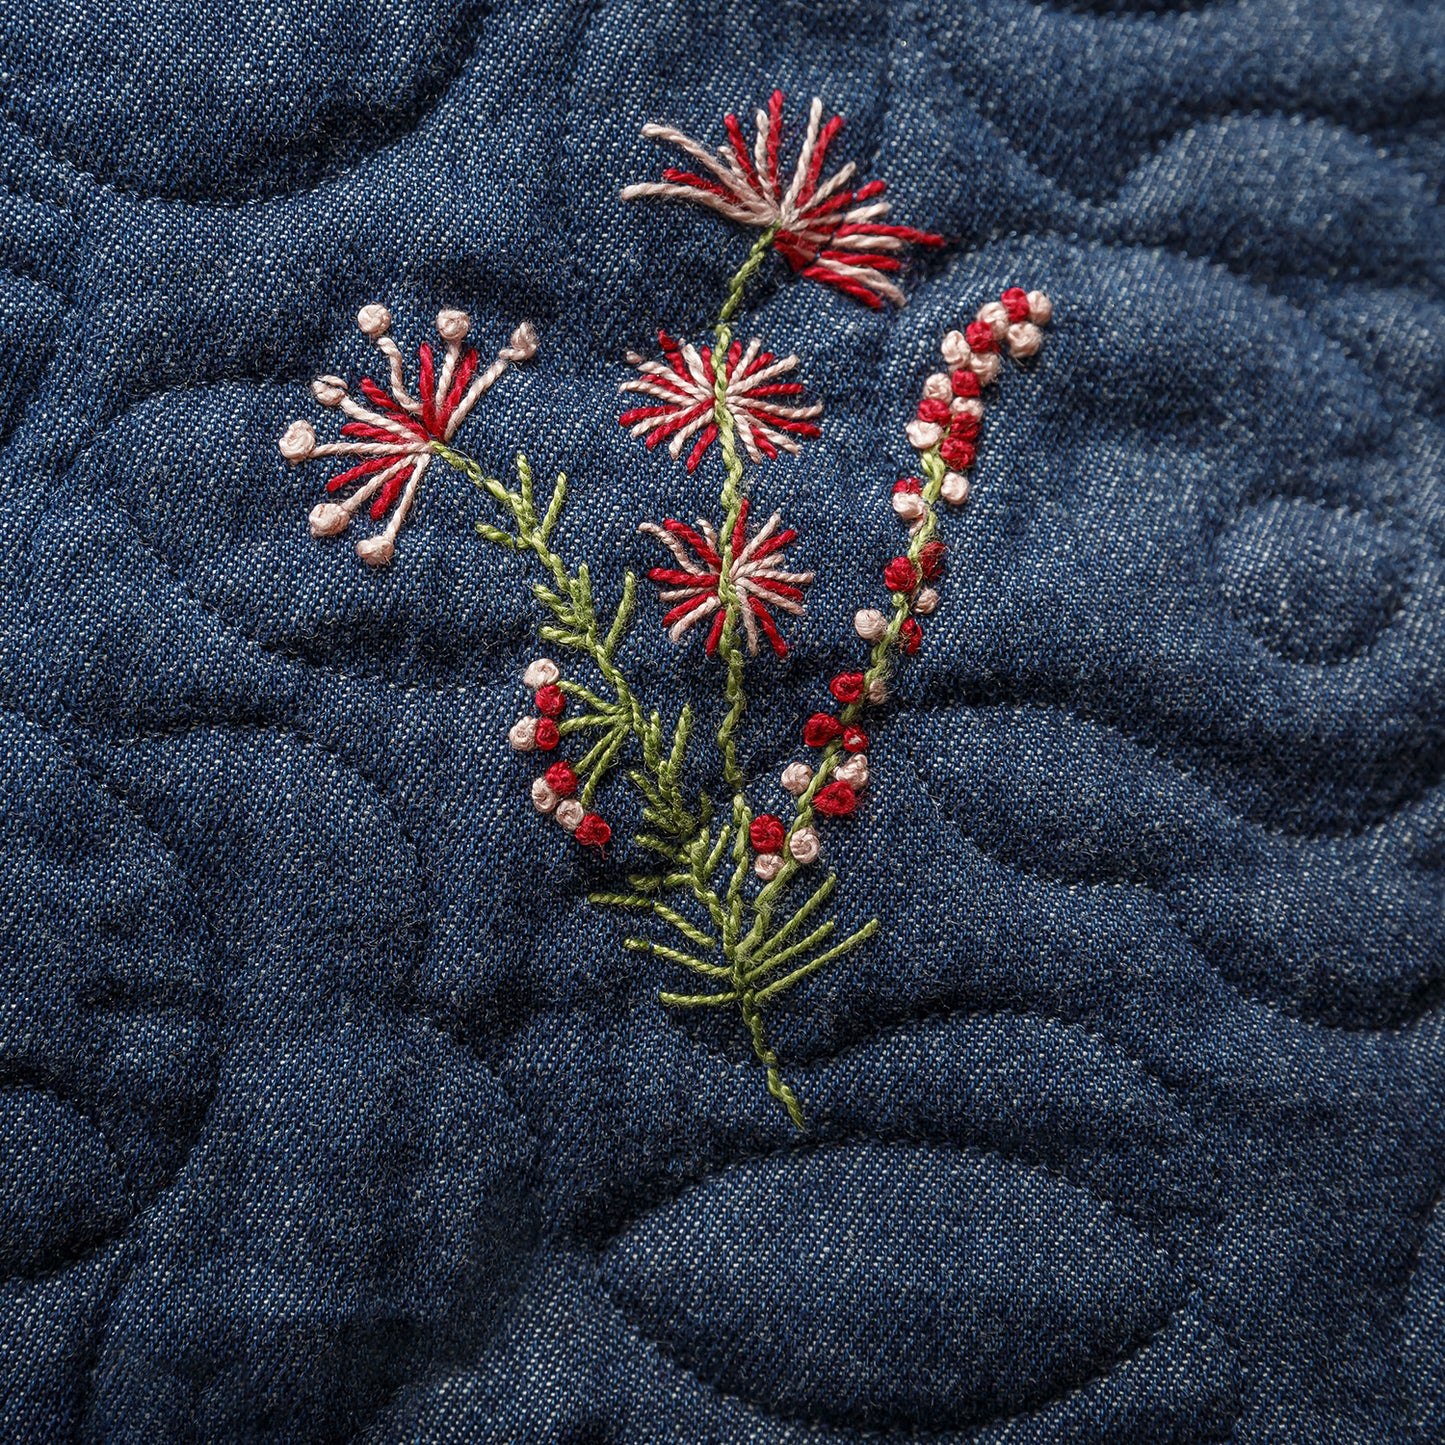 PREORDER - Ingrid's Wildflowers - An Heirloom Embroidery Kit by Missouri Star Alternative View #26